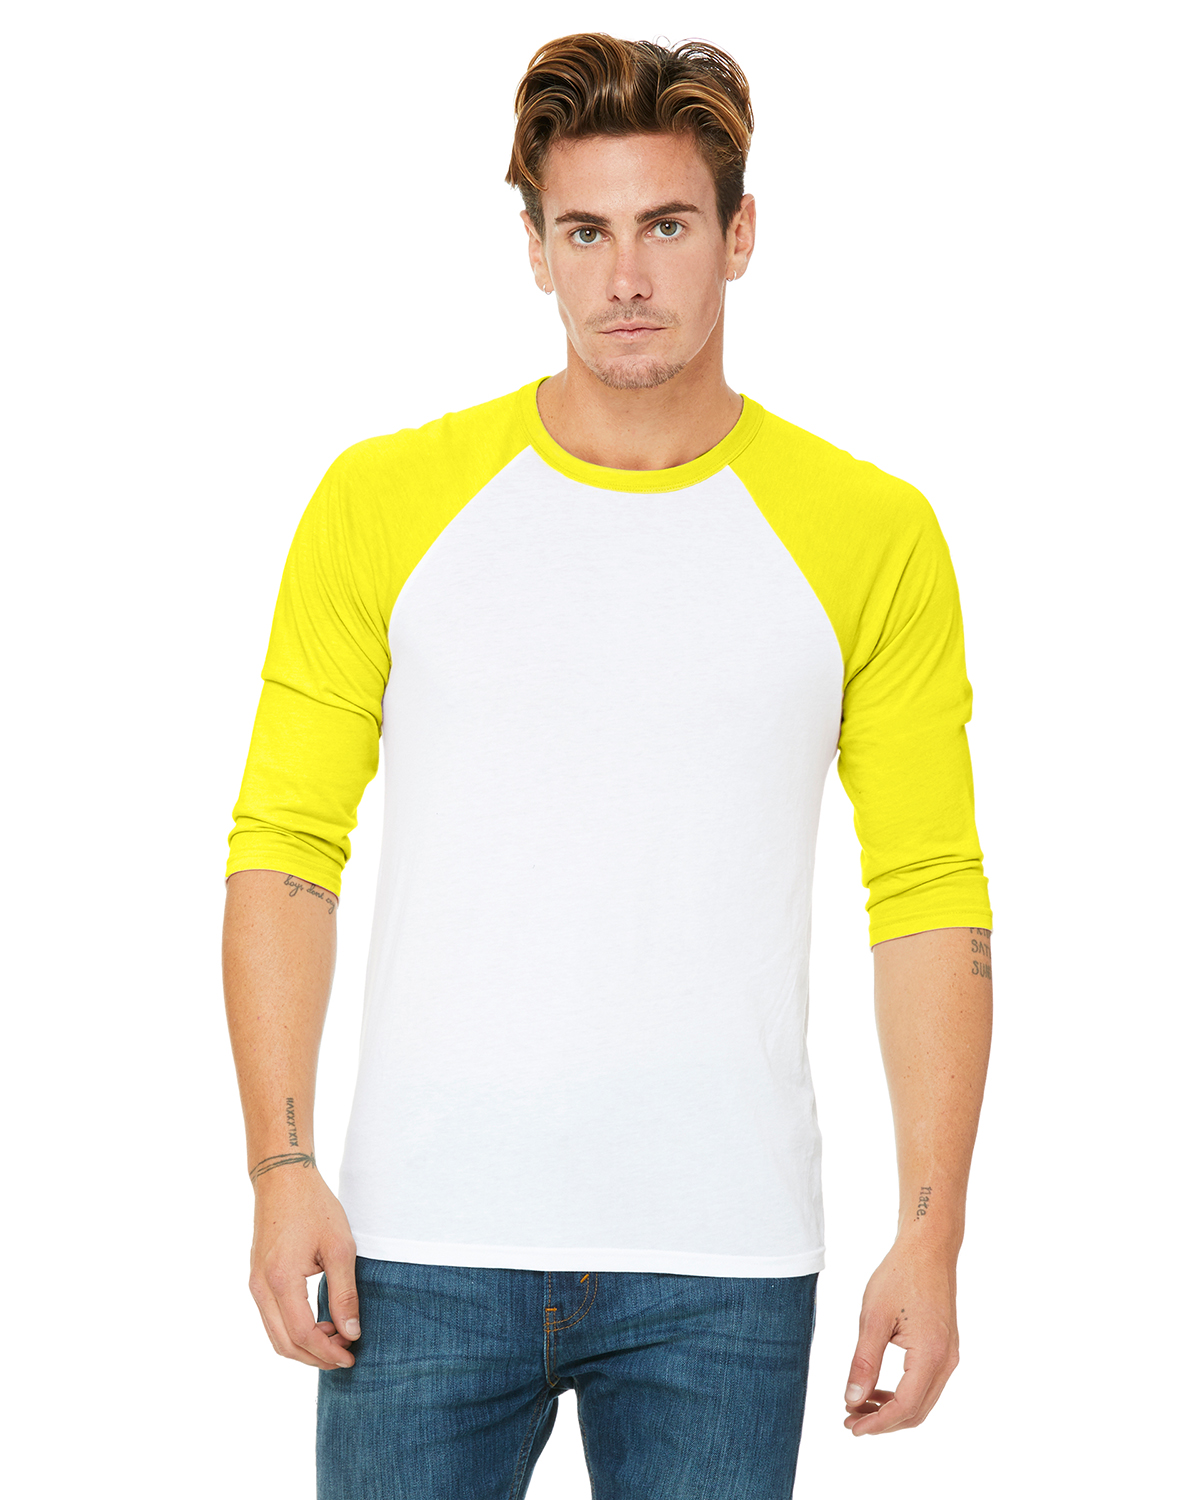 SkyeDana Toby Keith Classic Mens Casual Sports Raglan Shirt 3/4 Sleeve Baseball T-Shirt Top 